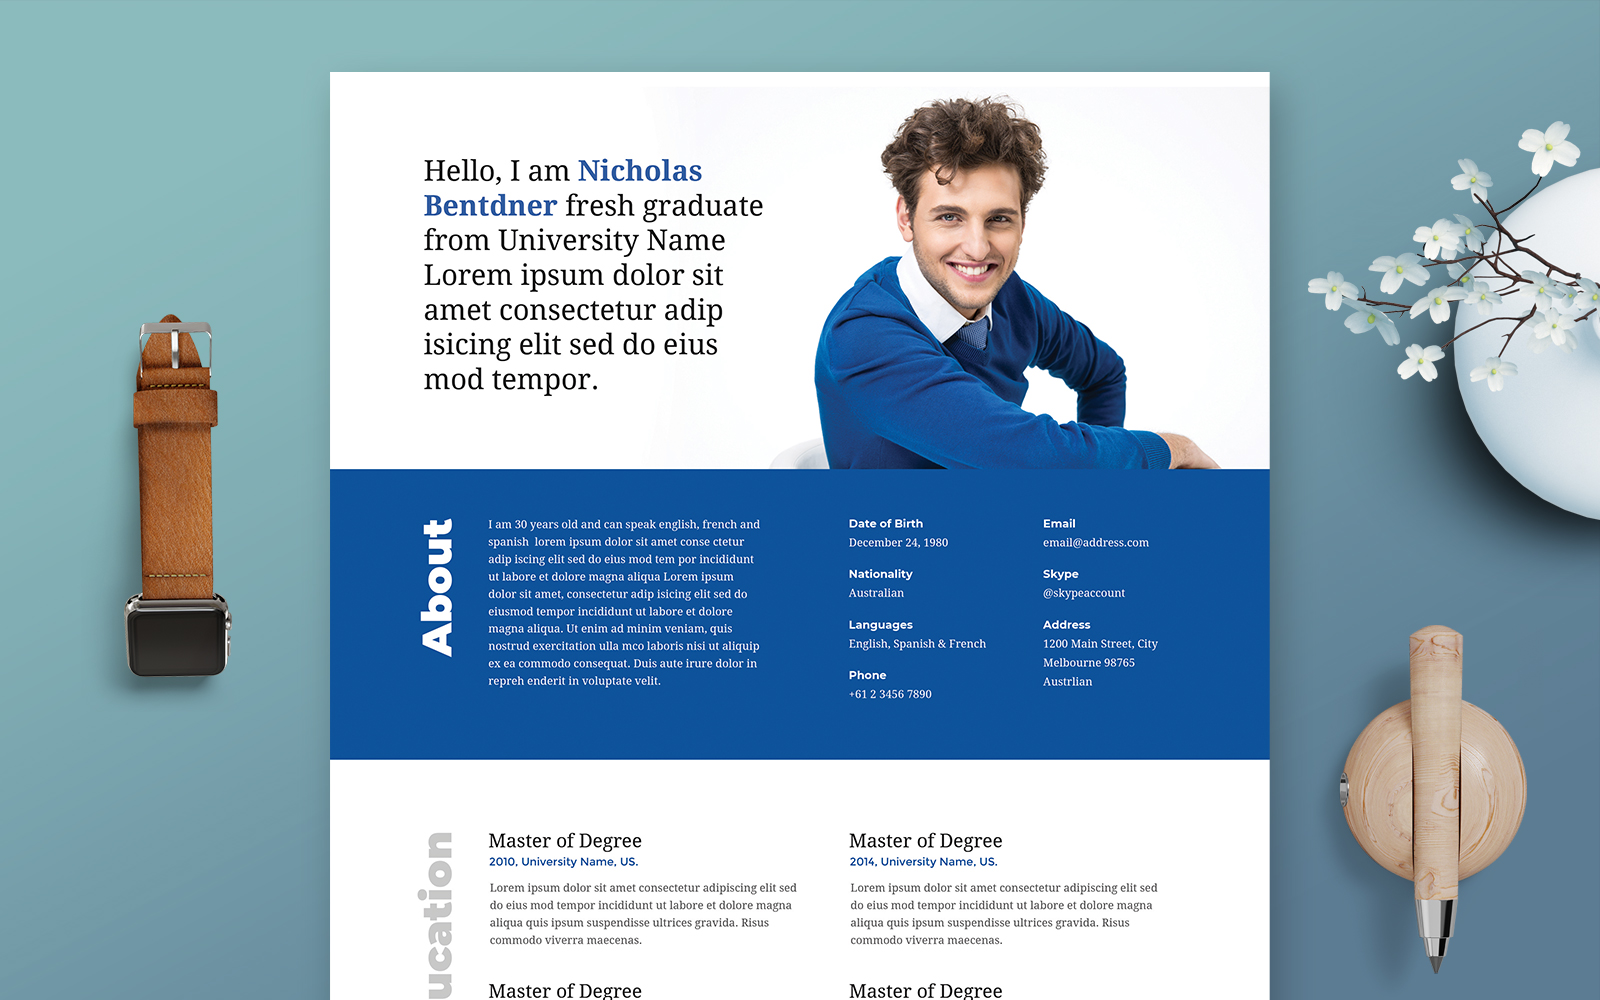 Nicholas Bentdner | Professional and Clean Resume Template